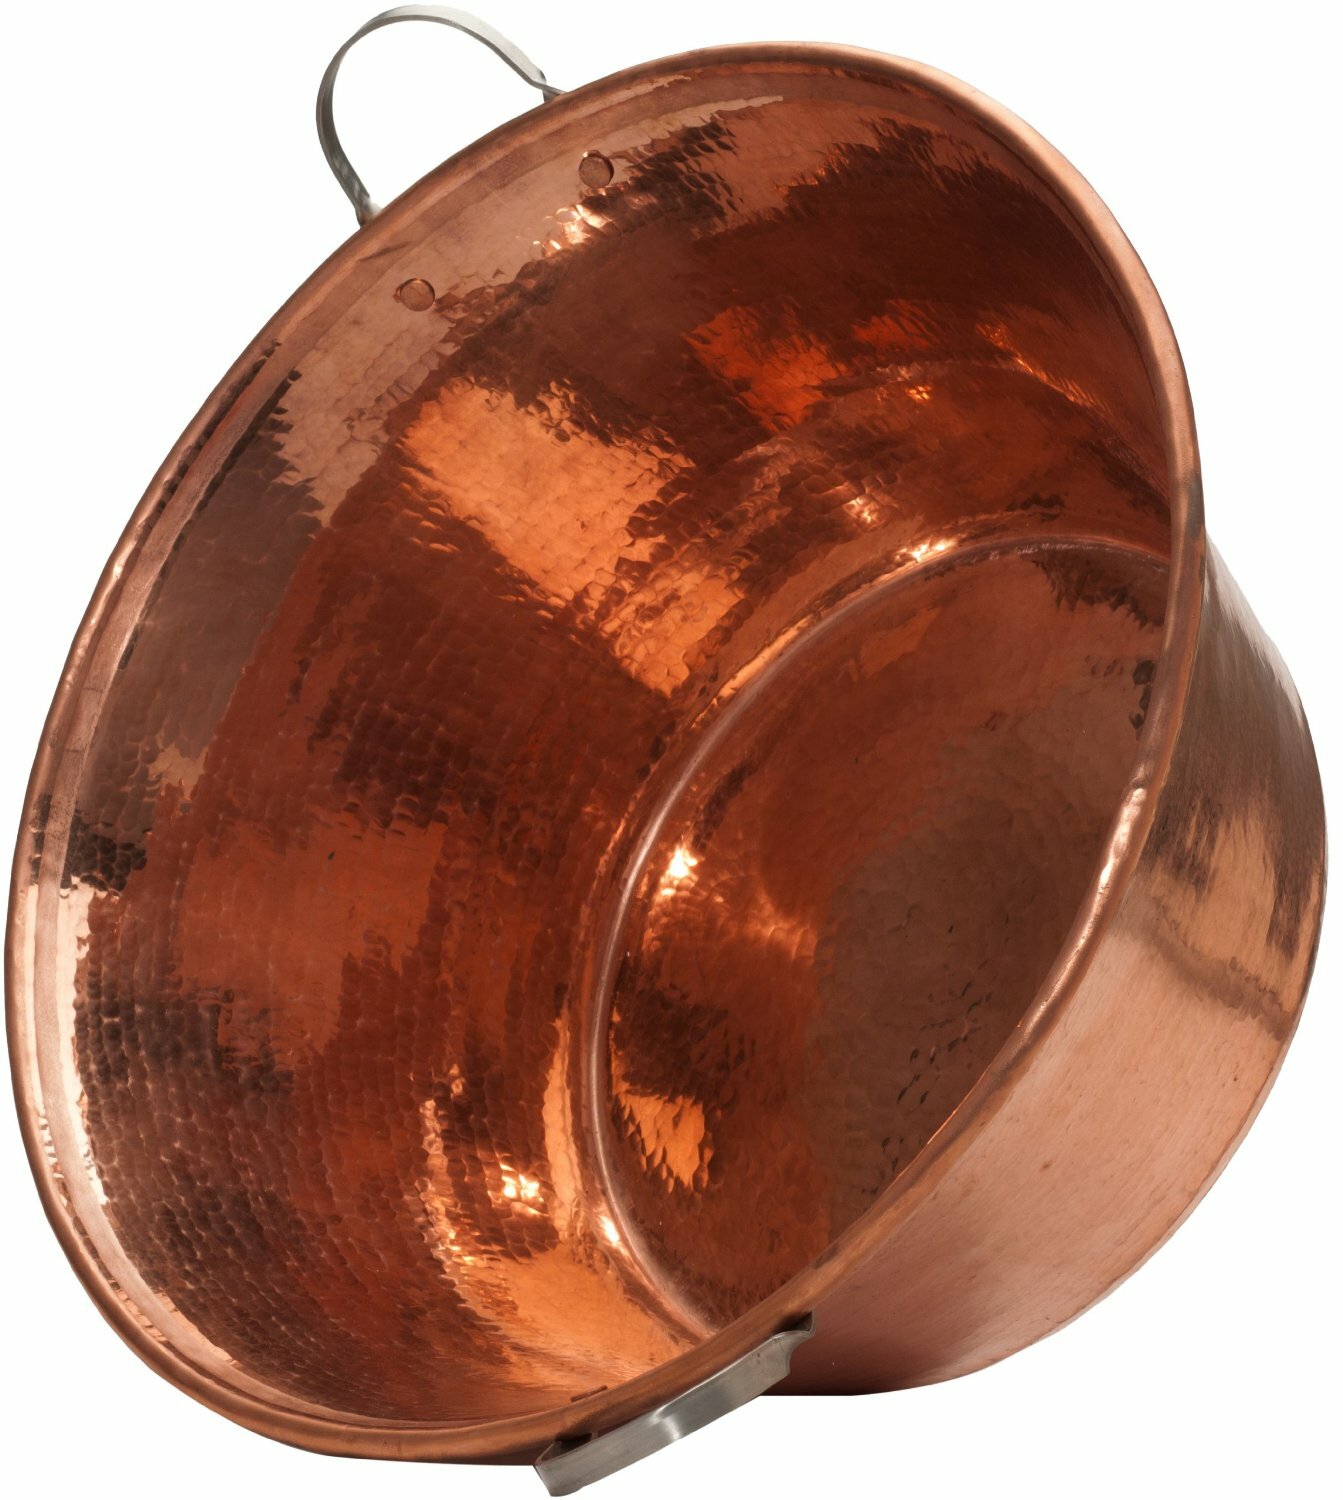 Sertodo Copper Copper Dutch Oven, 12 Quart